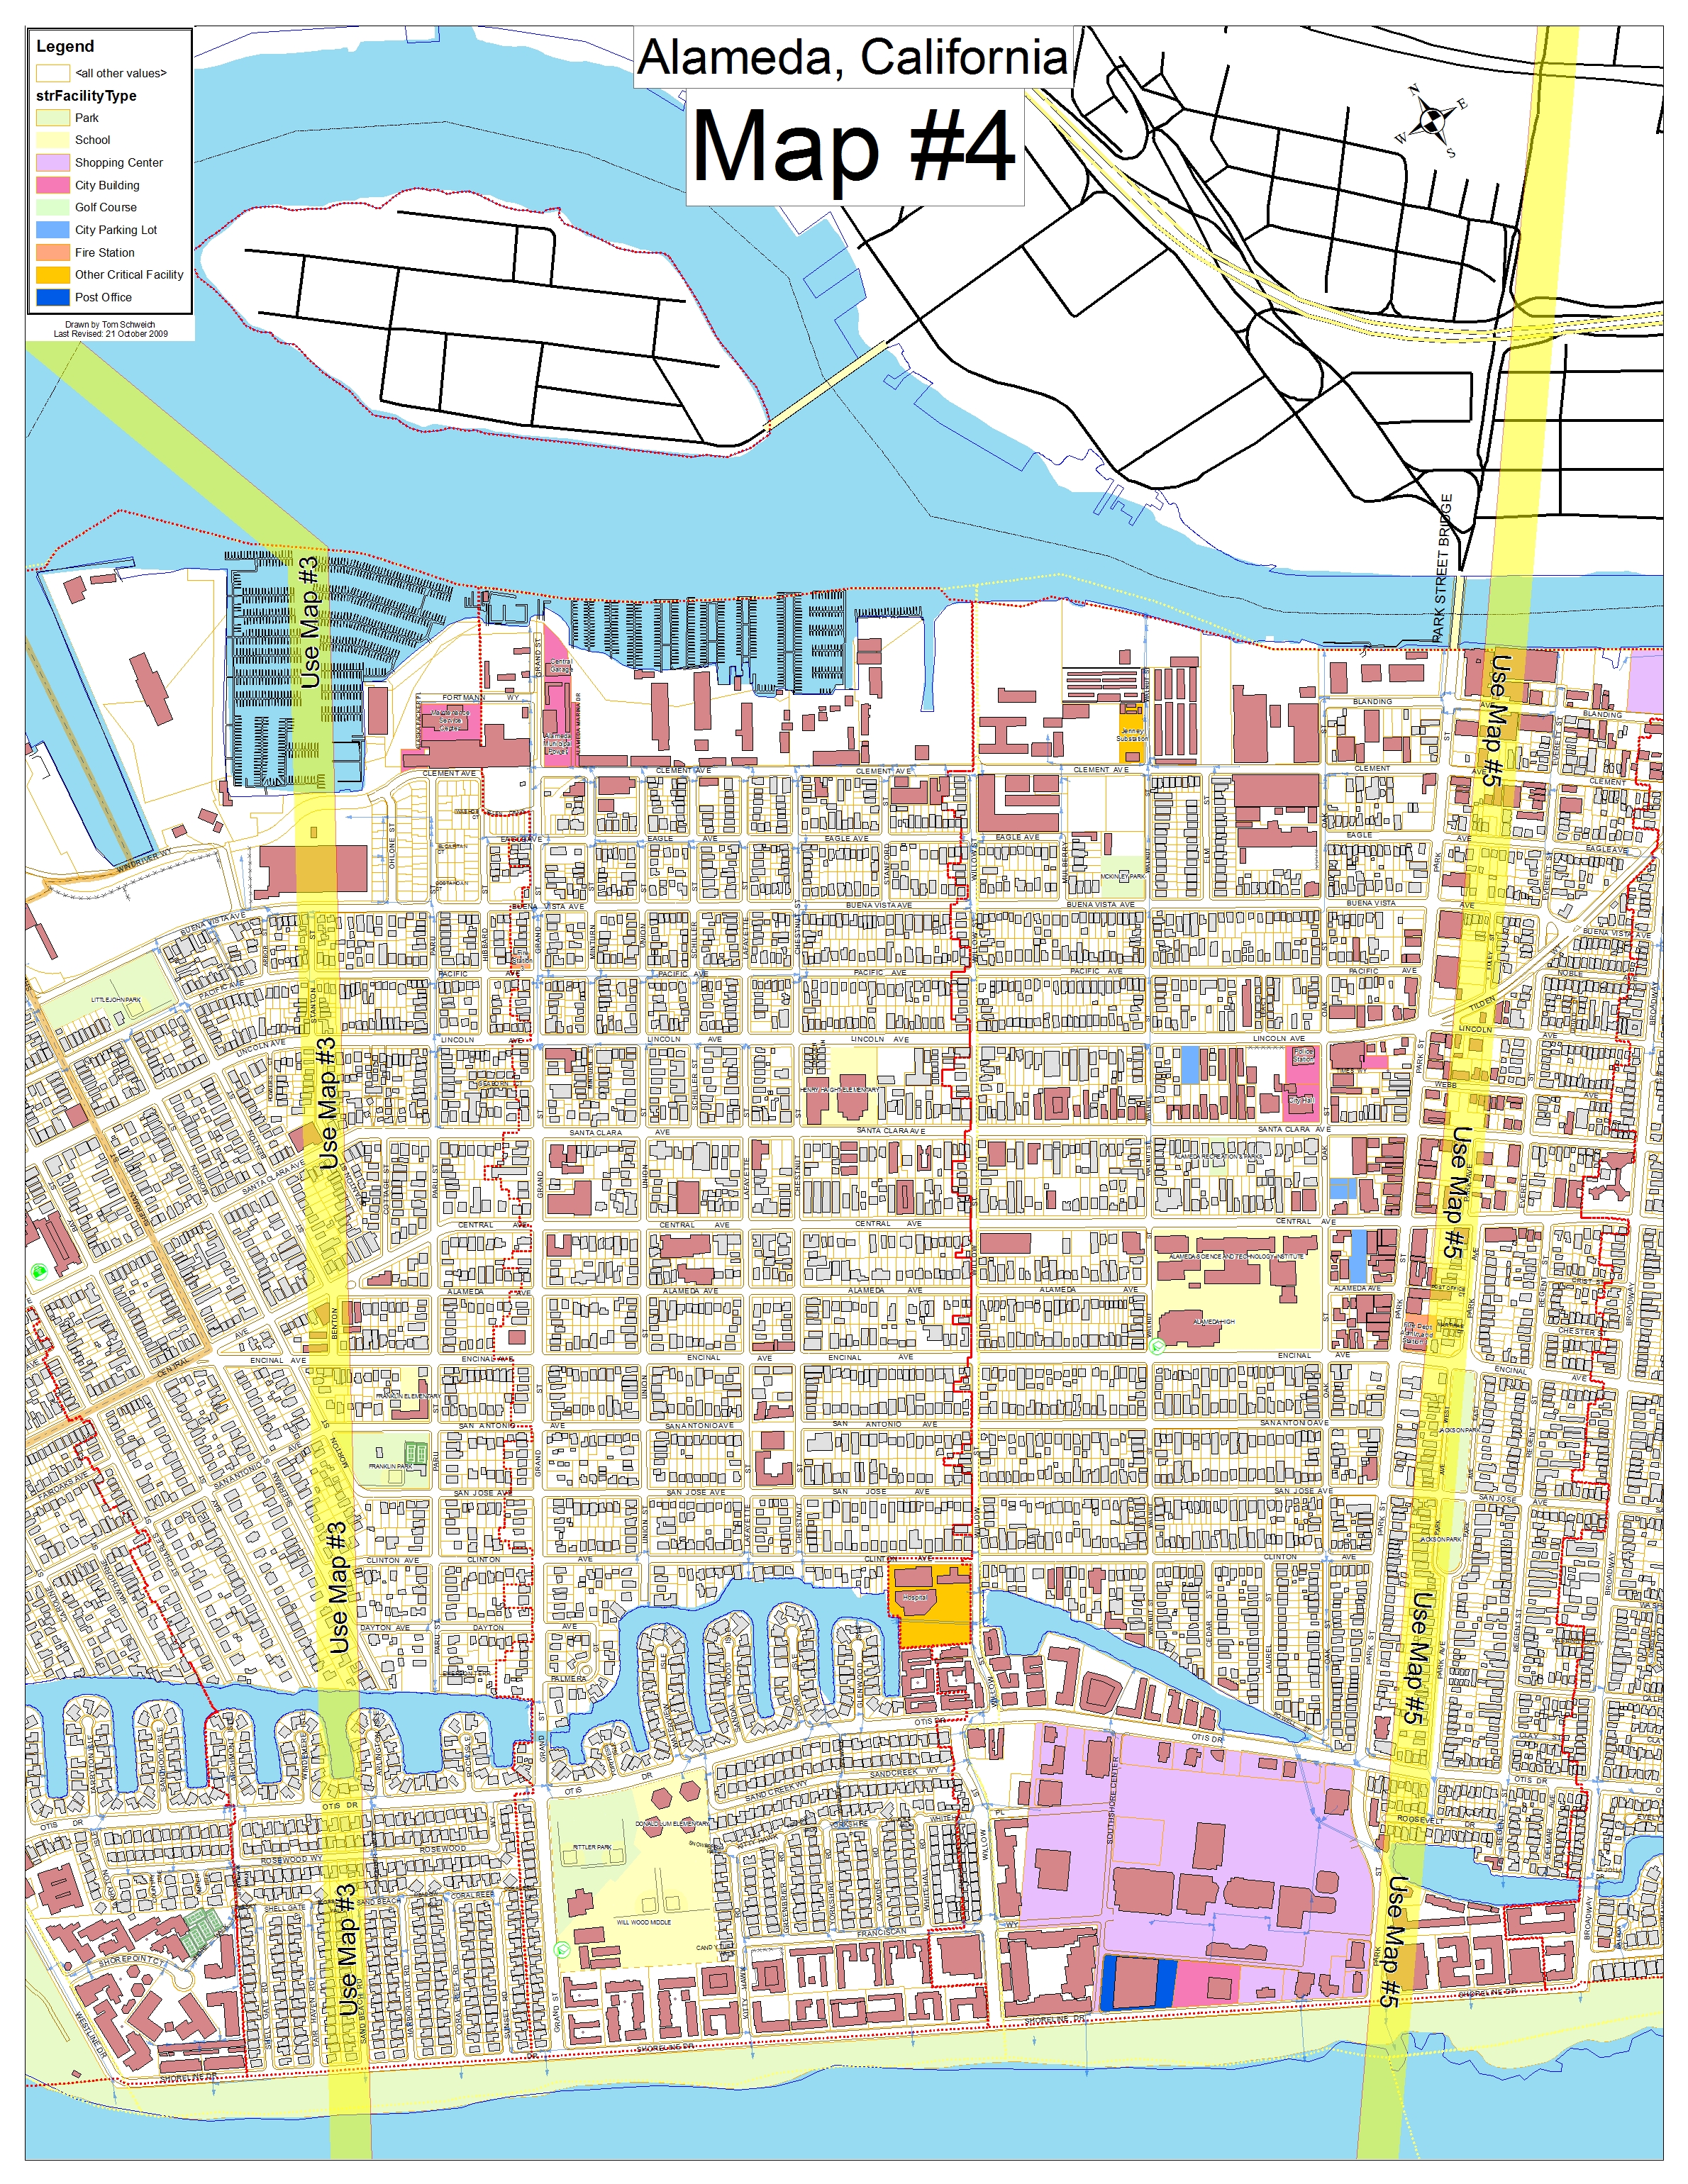 Map of central portion of Alameda.